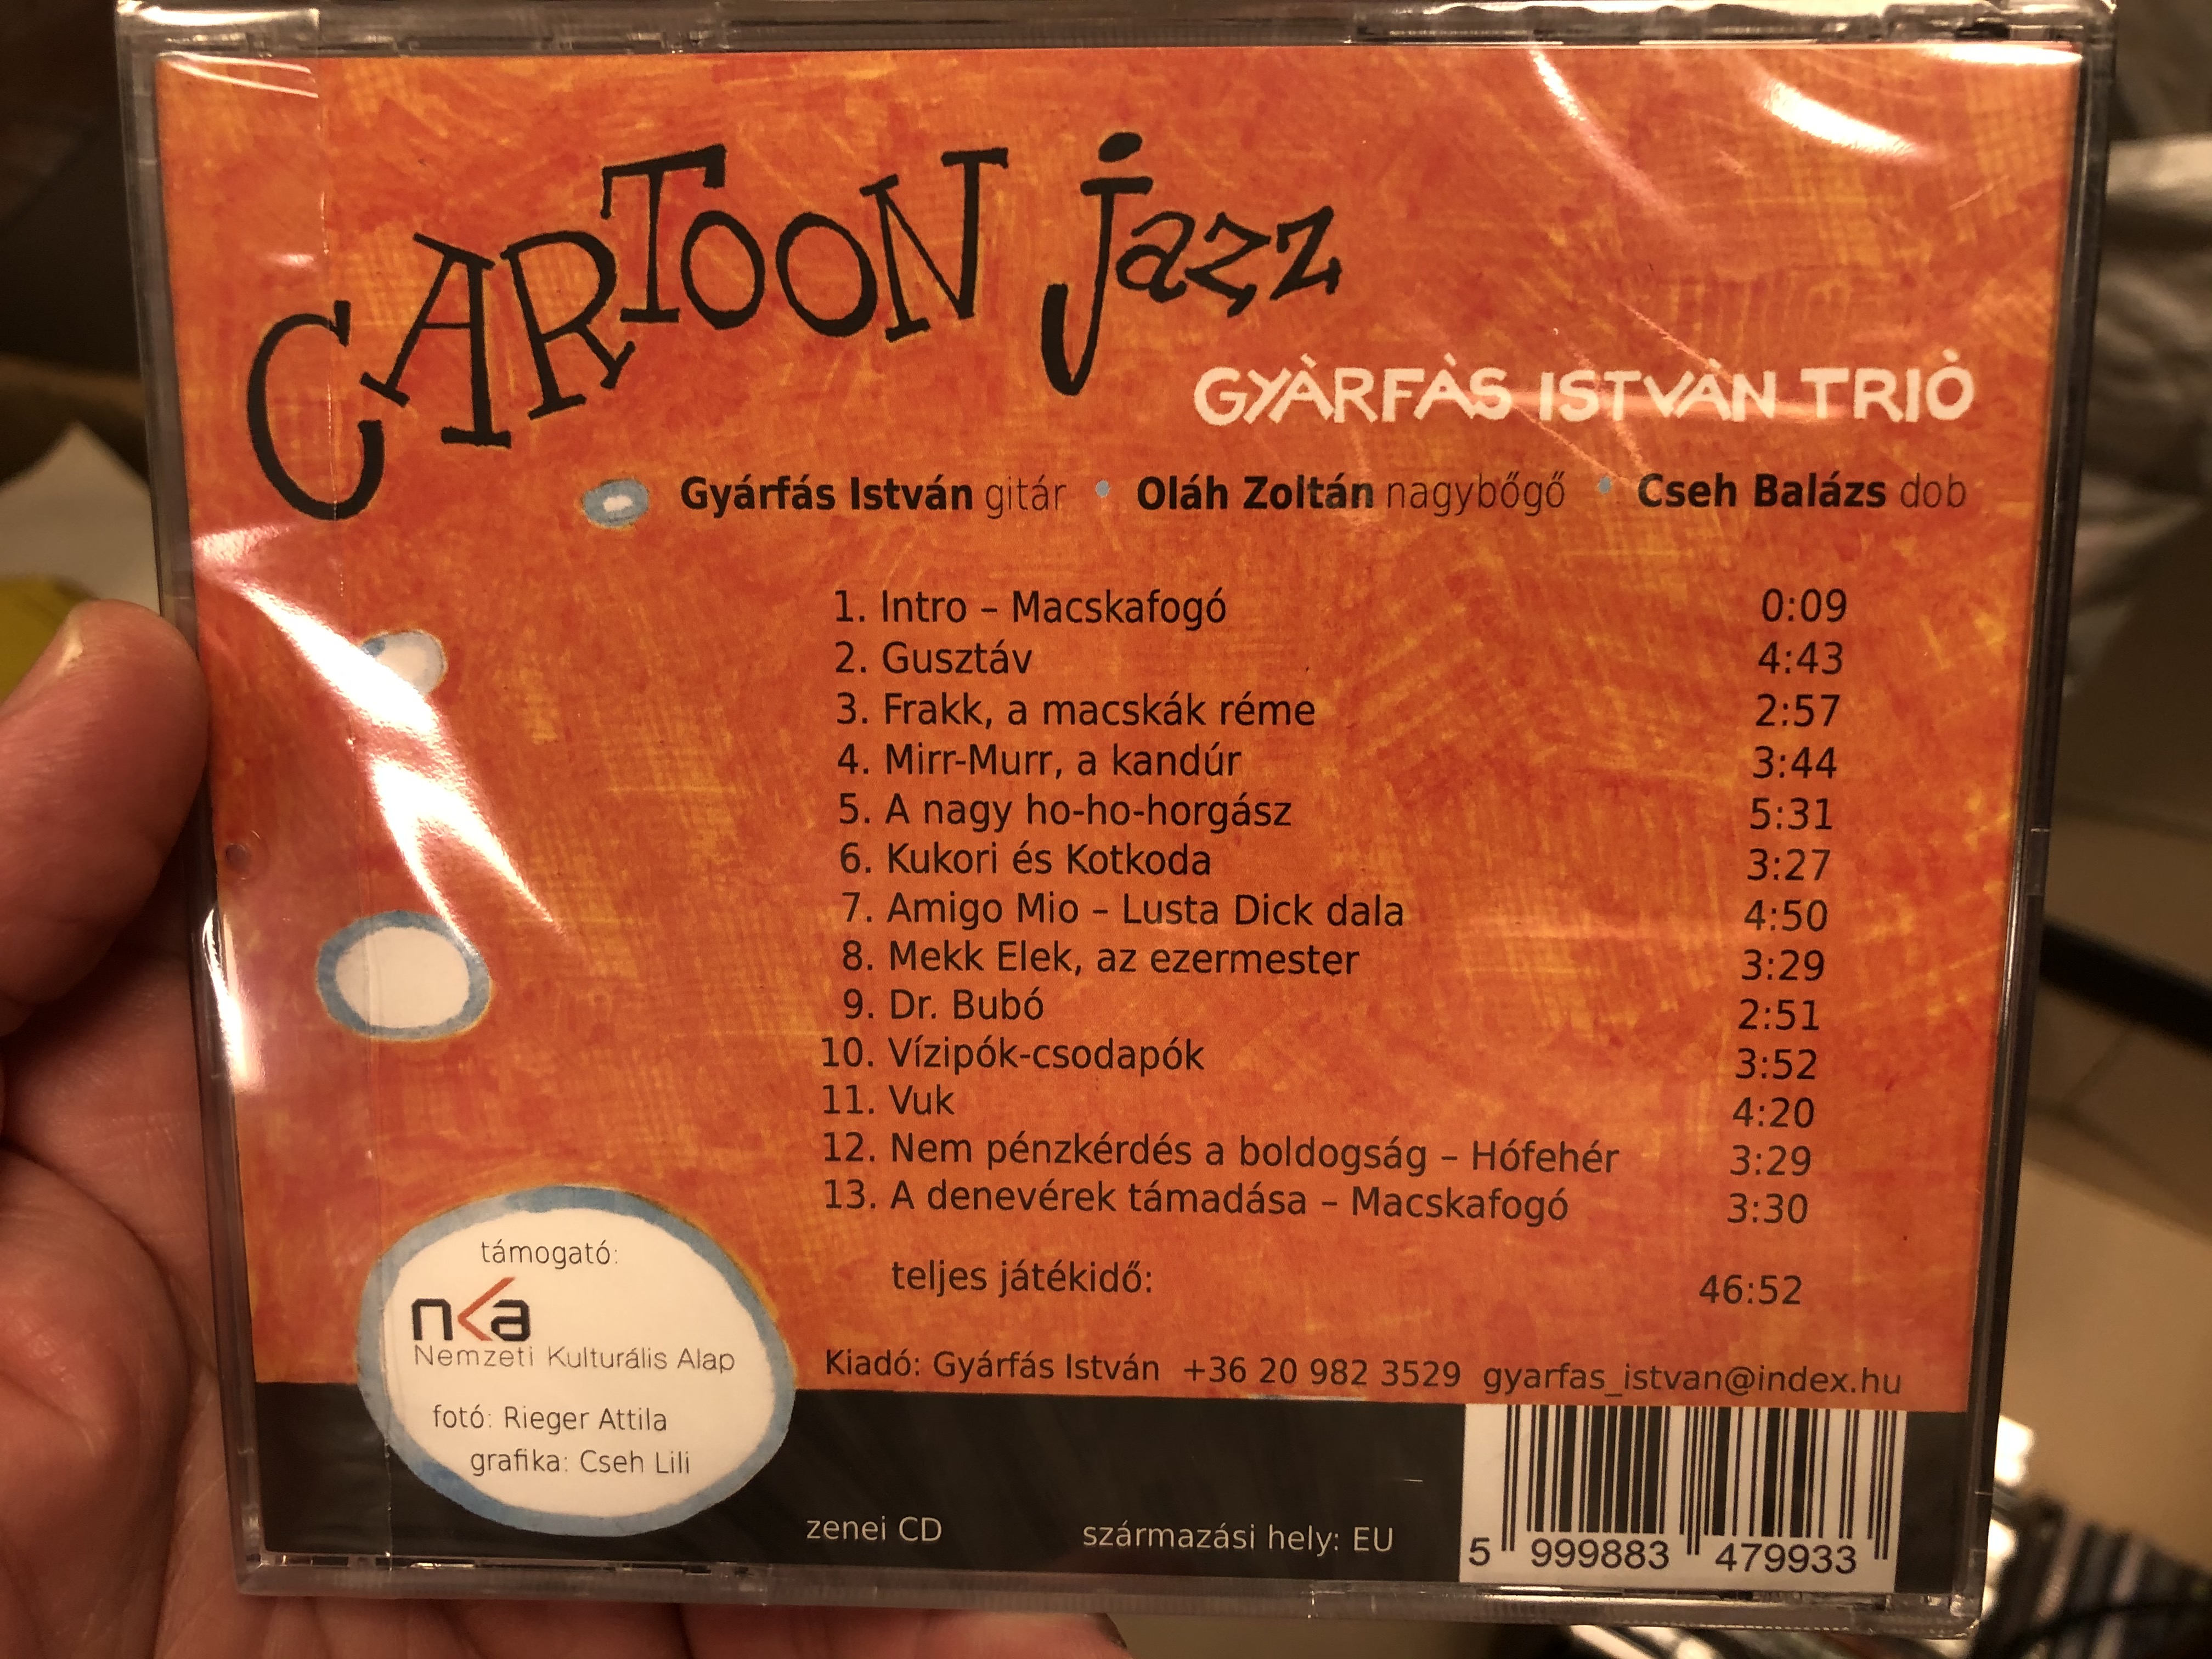 cartoon-jazz-gyarfas-istvan-trio-nemzeti-kulturalis-alap-audio-cd-5999883479933-2-.jpg